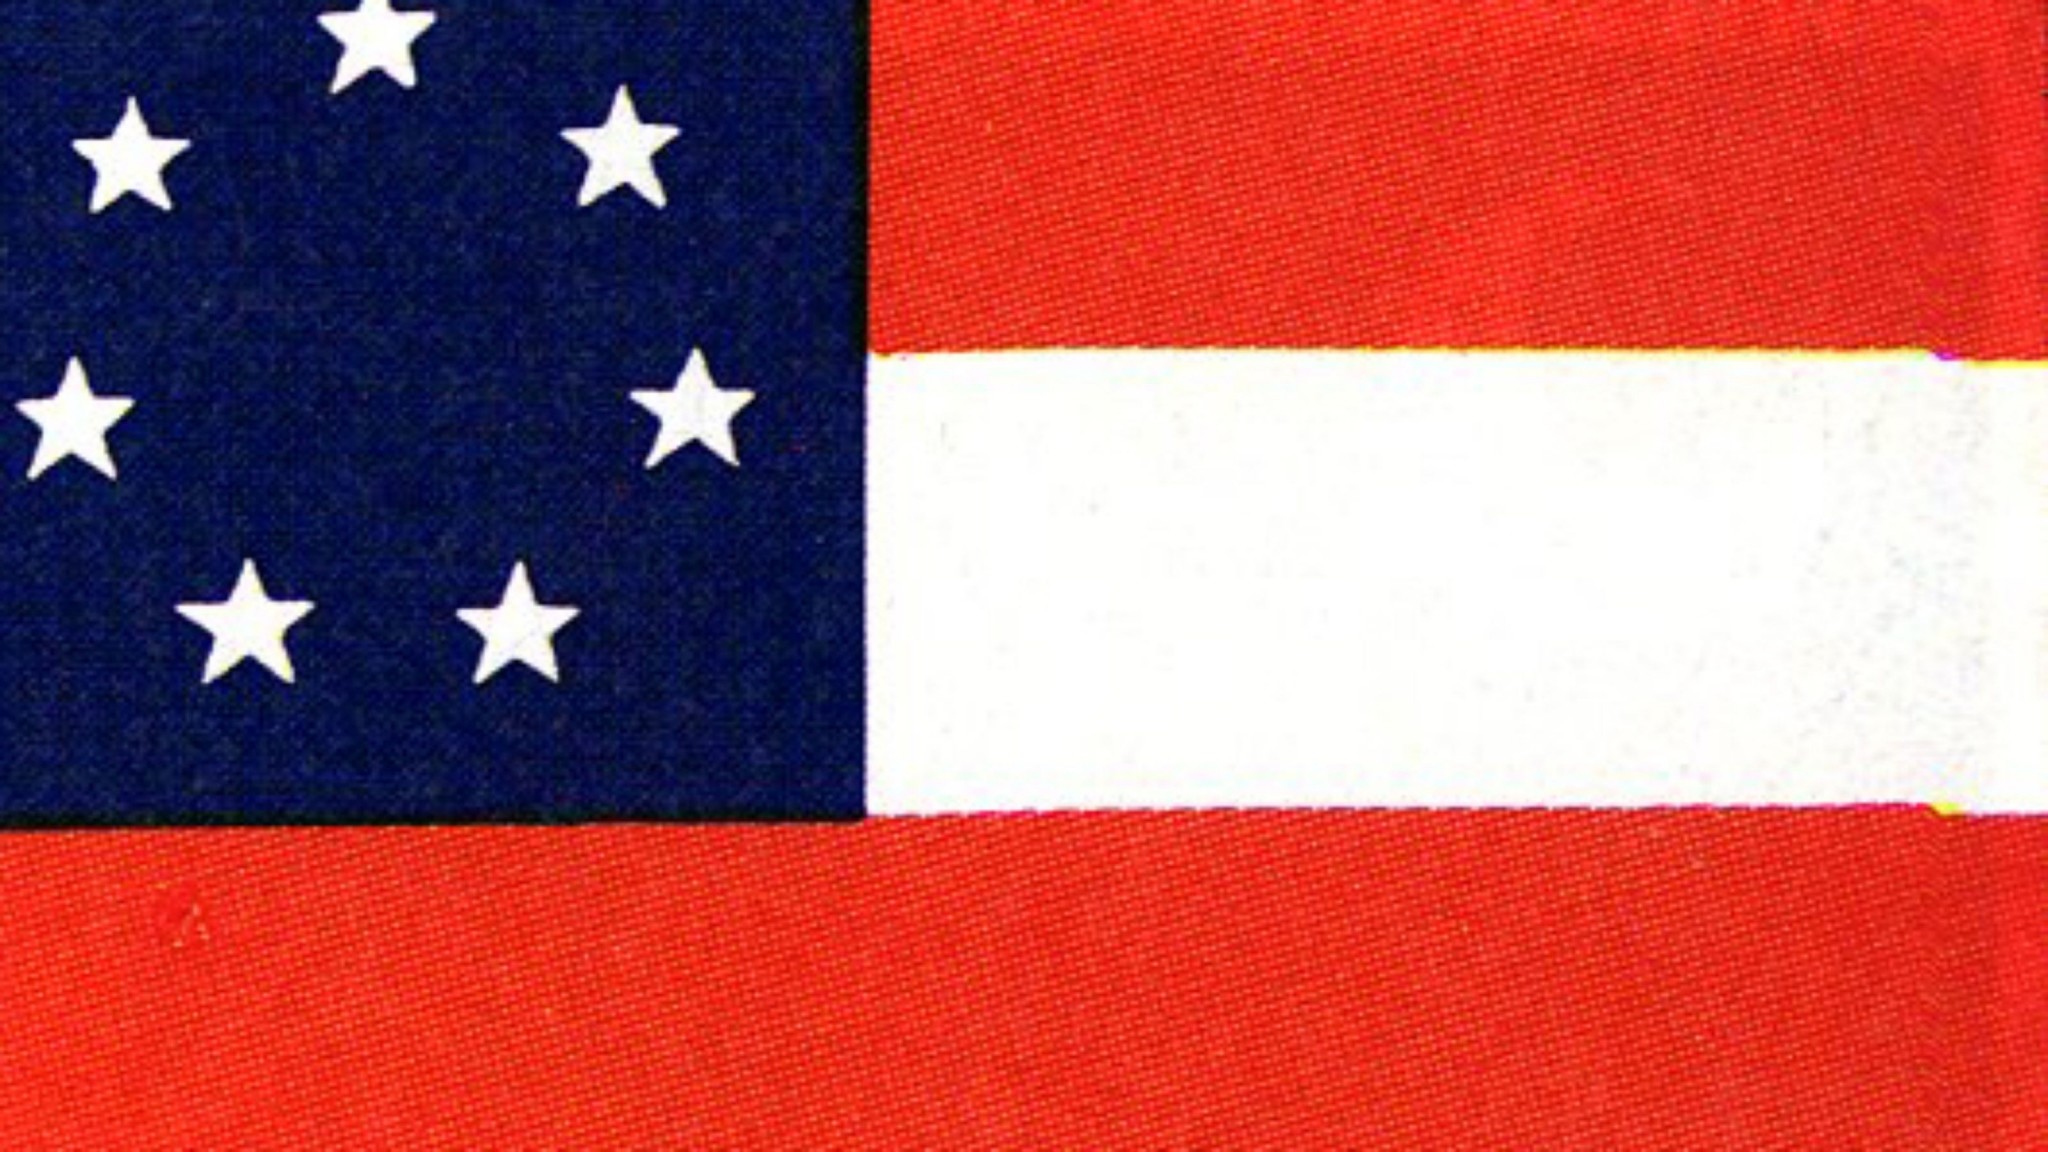 confederate flag hd widescreen wallpapers backgrounds | ololoshenka |  Pinterest | Hd widescreen wallpapers, Widescreen wallpaper and Wallpaper  backgrounds